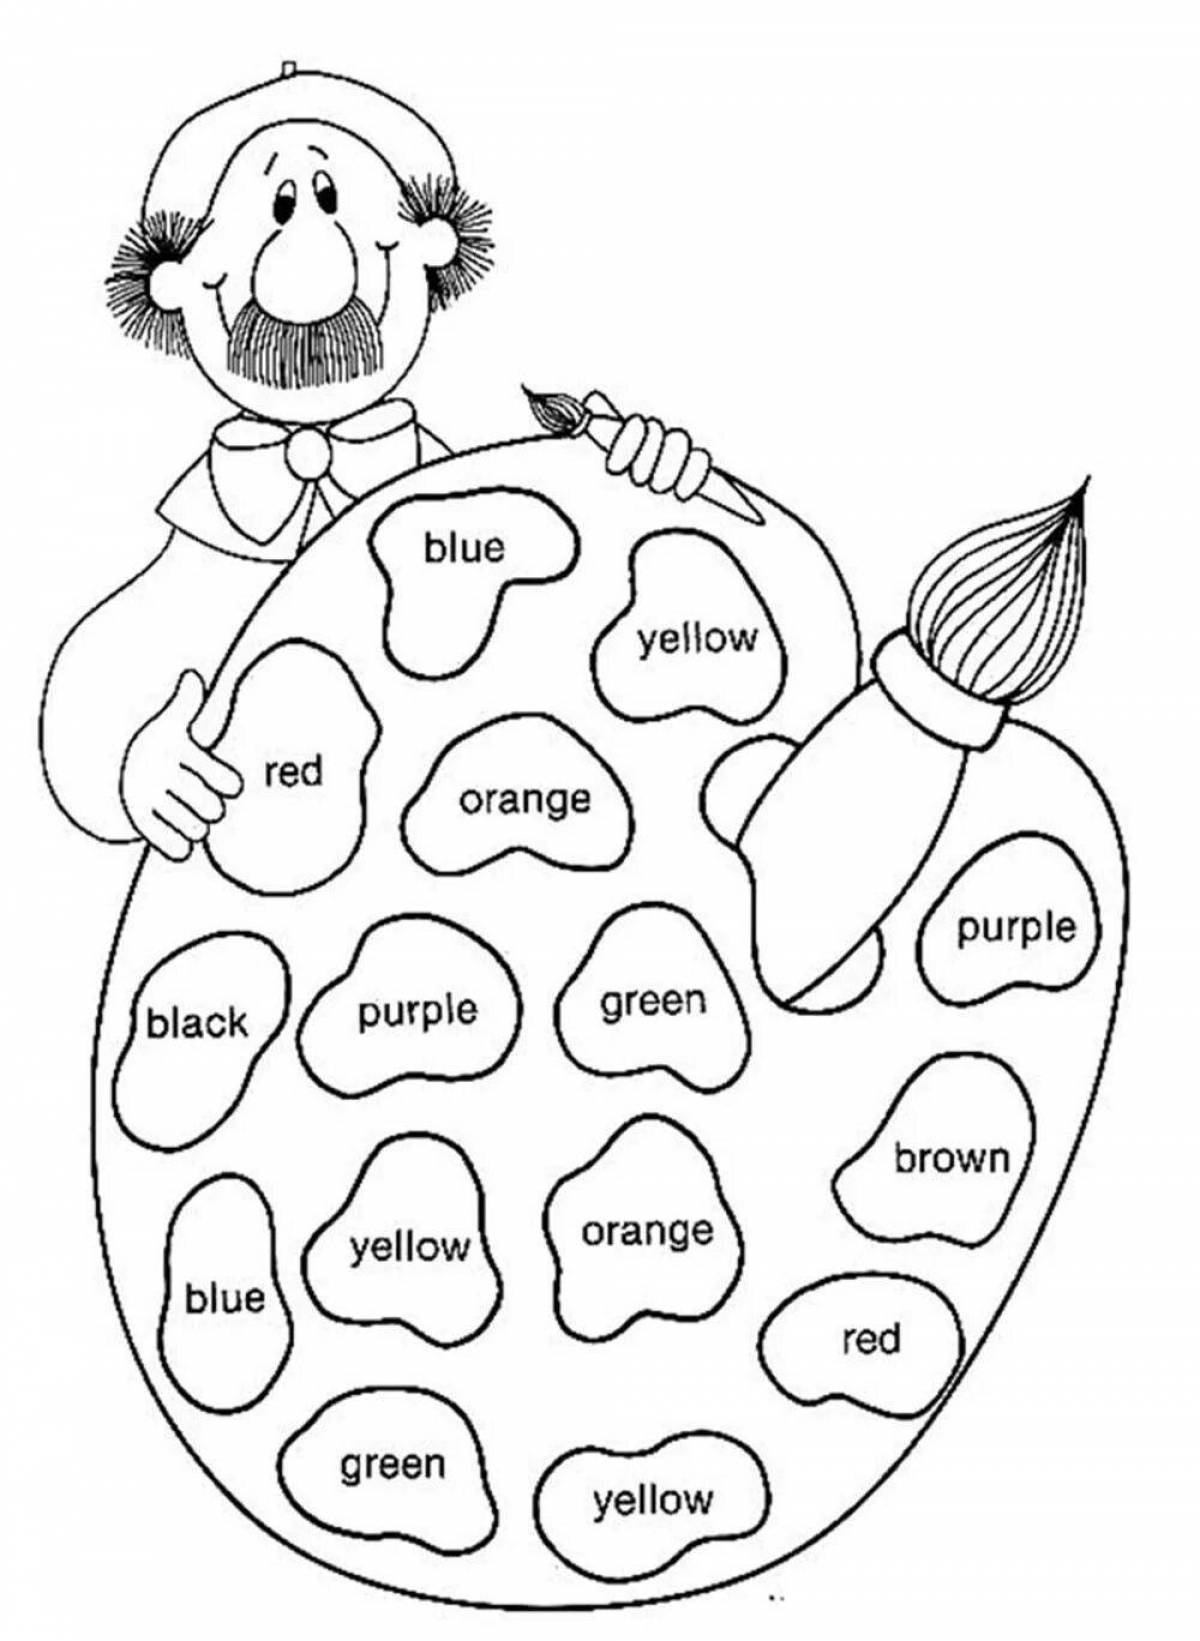 Vibrant language coloring book for preschoolers